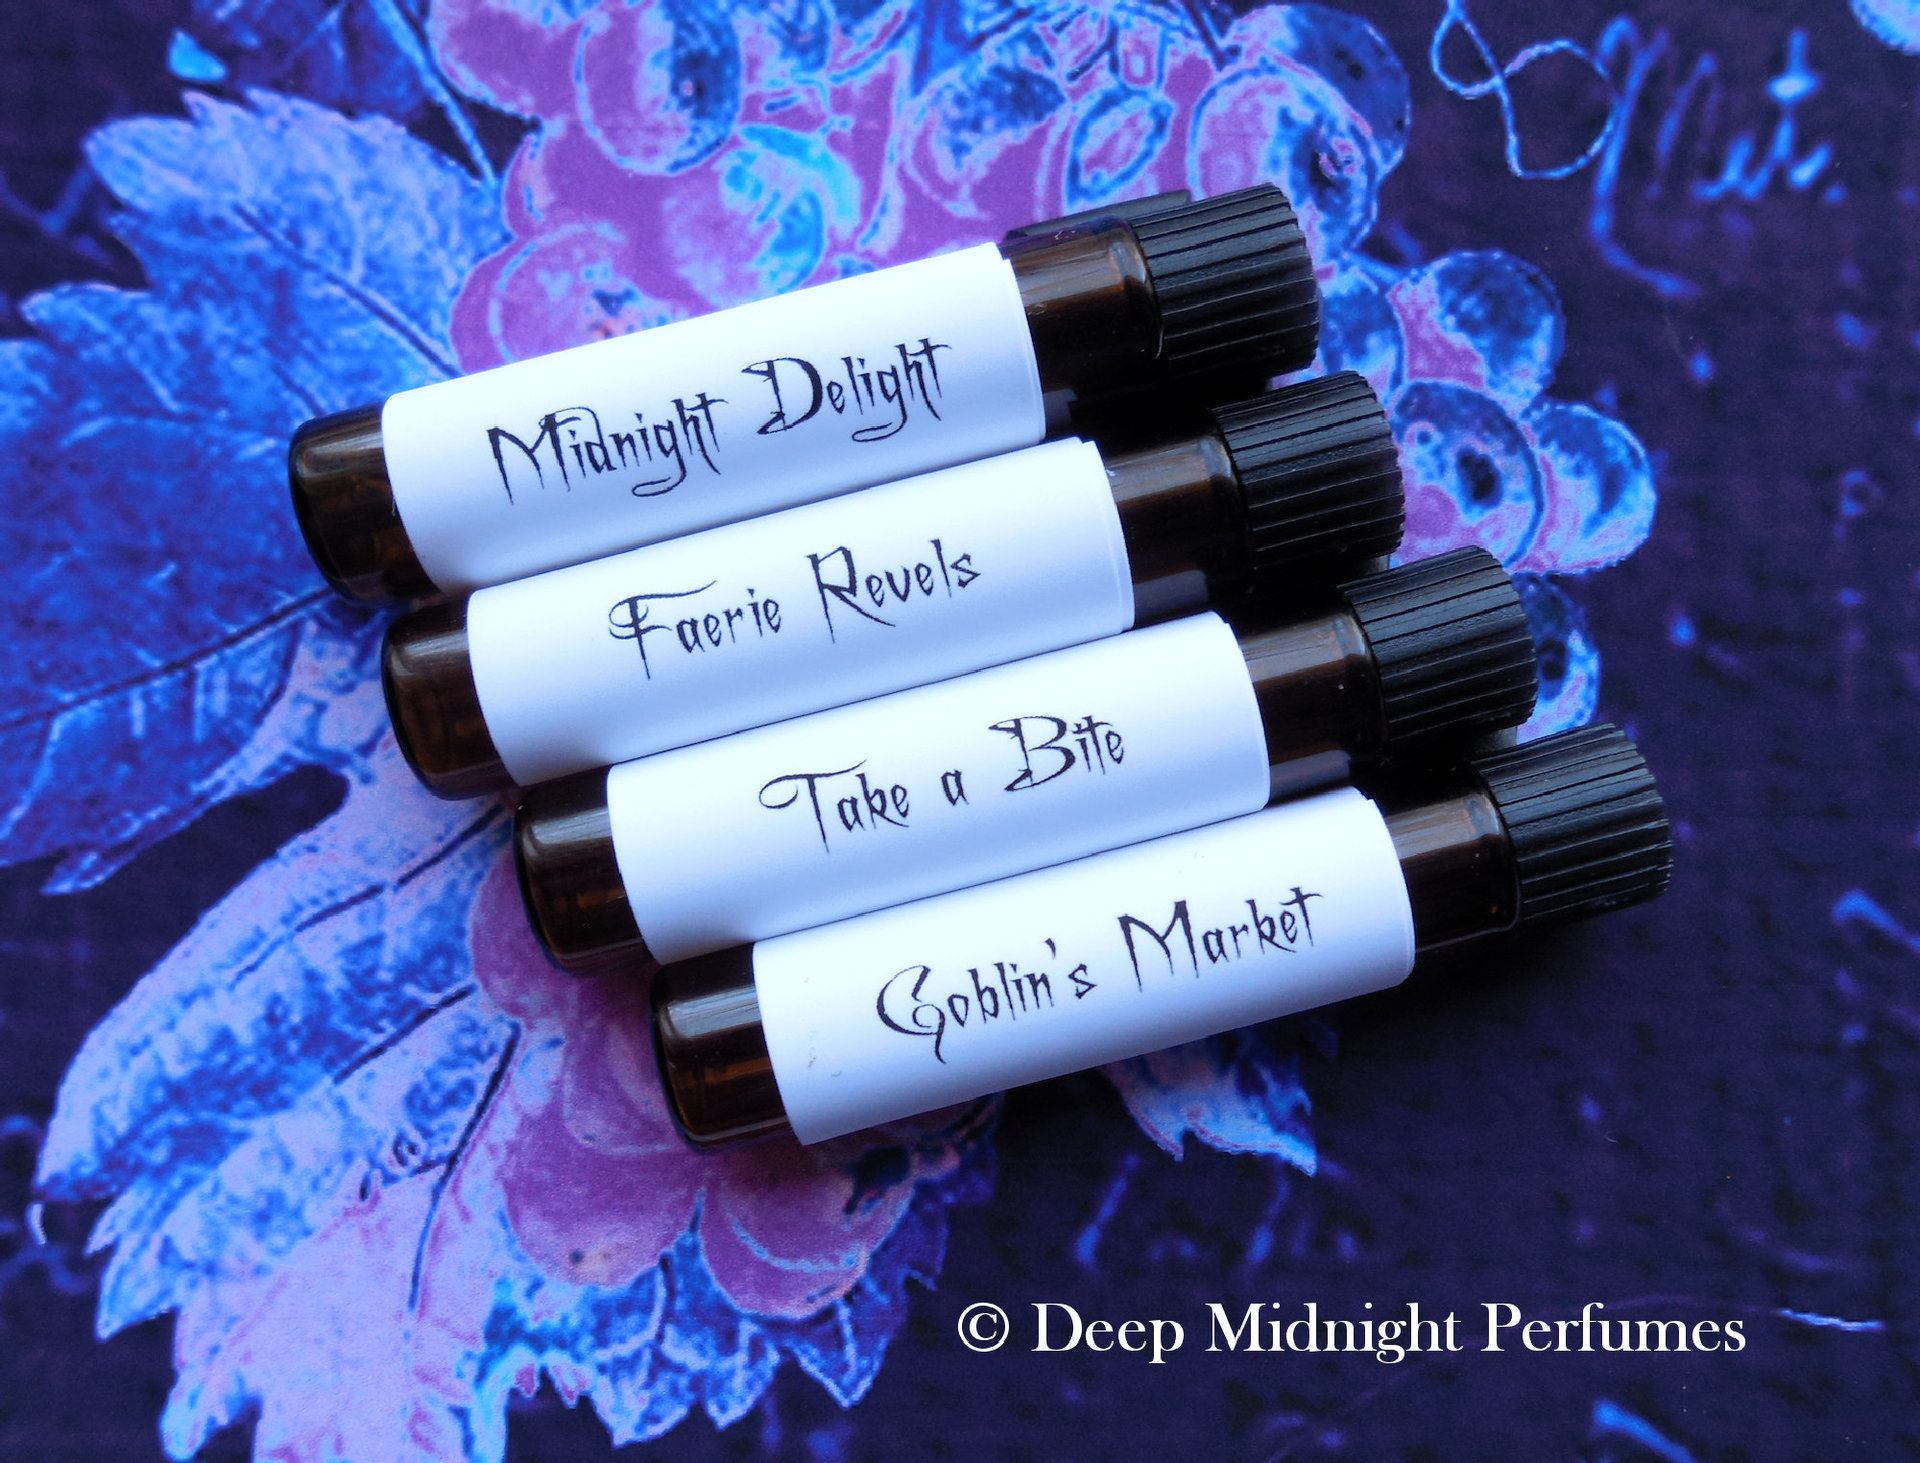 FORBIDDEN FRUITS™ Perfume Sampler Set - Deep Midnight Perfumes™ - Fantasy Perfume